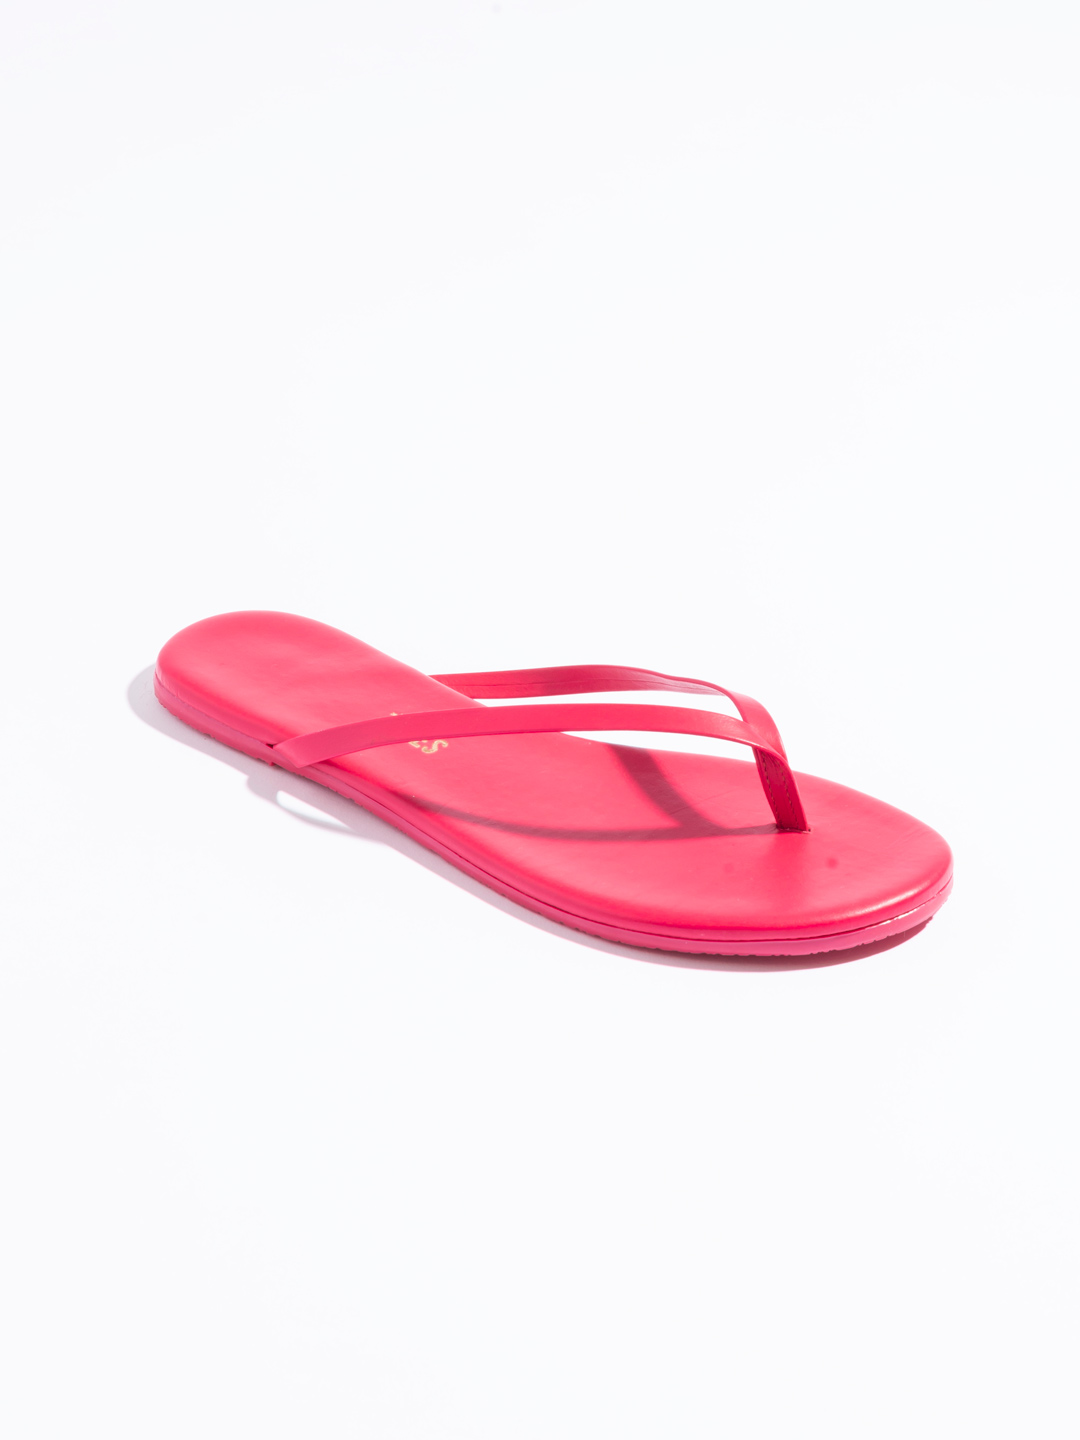 Most Loved Signature Flip Flop Sandals - Pink